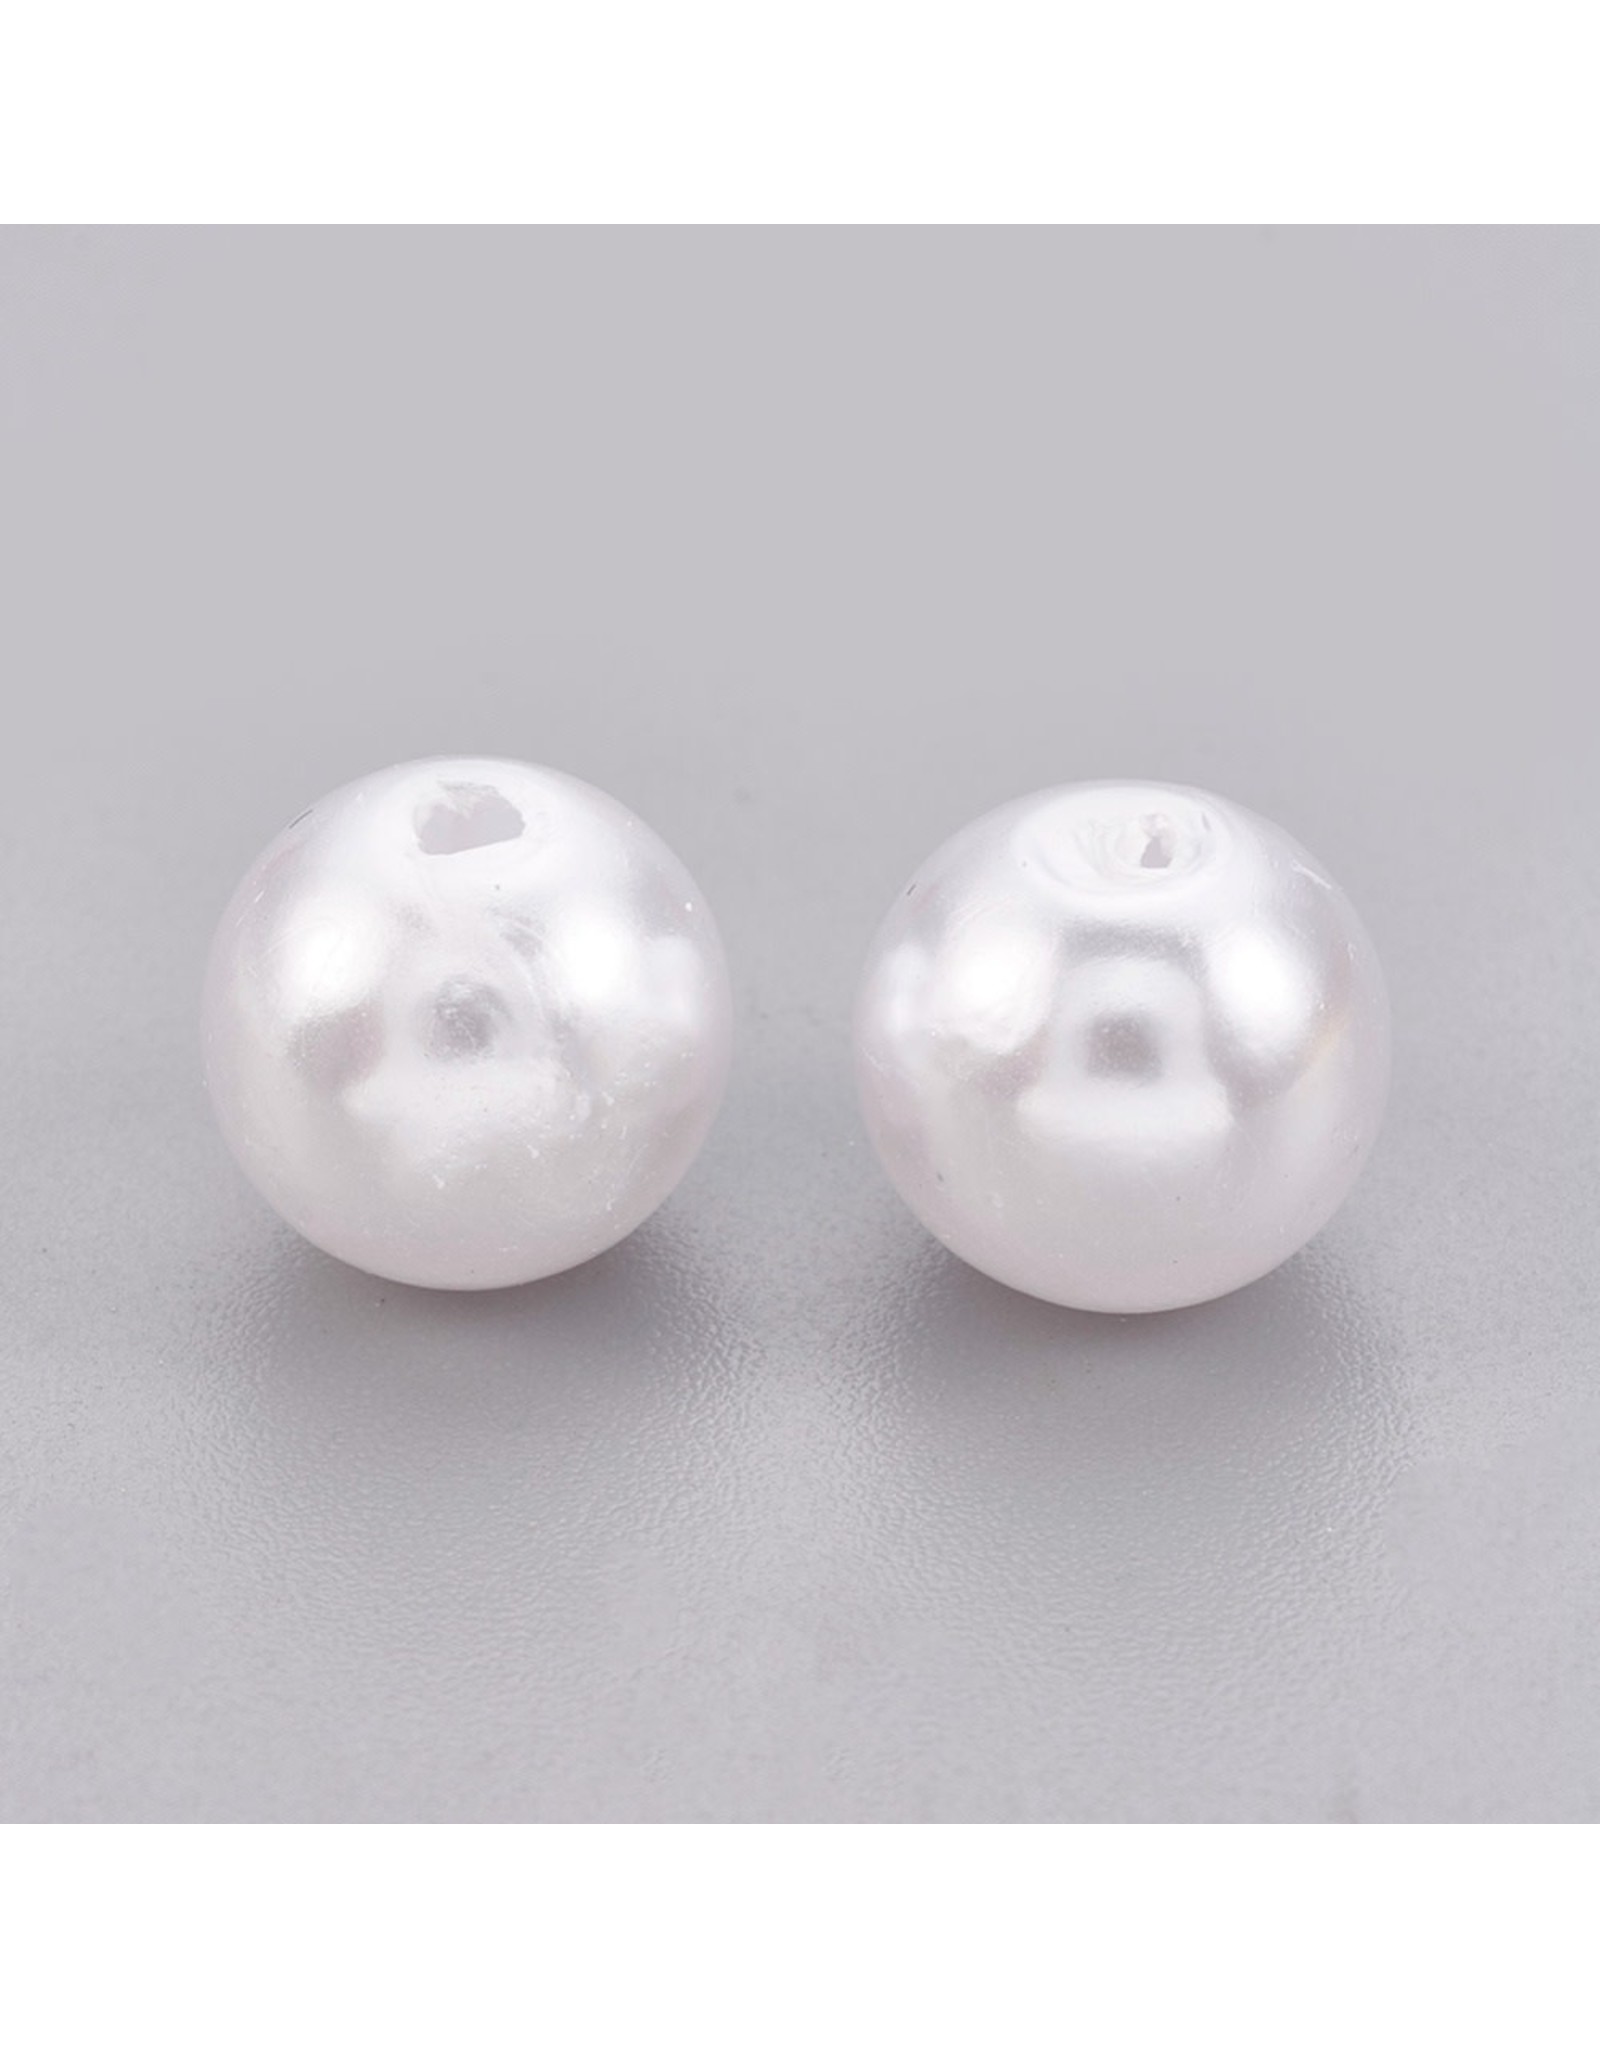 Craft Pearls  4mm White  x1000